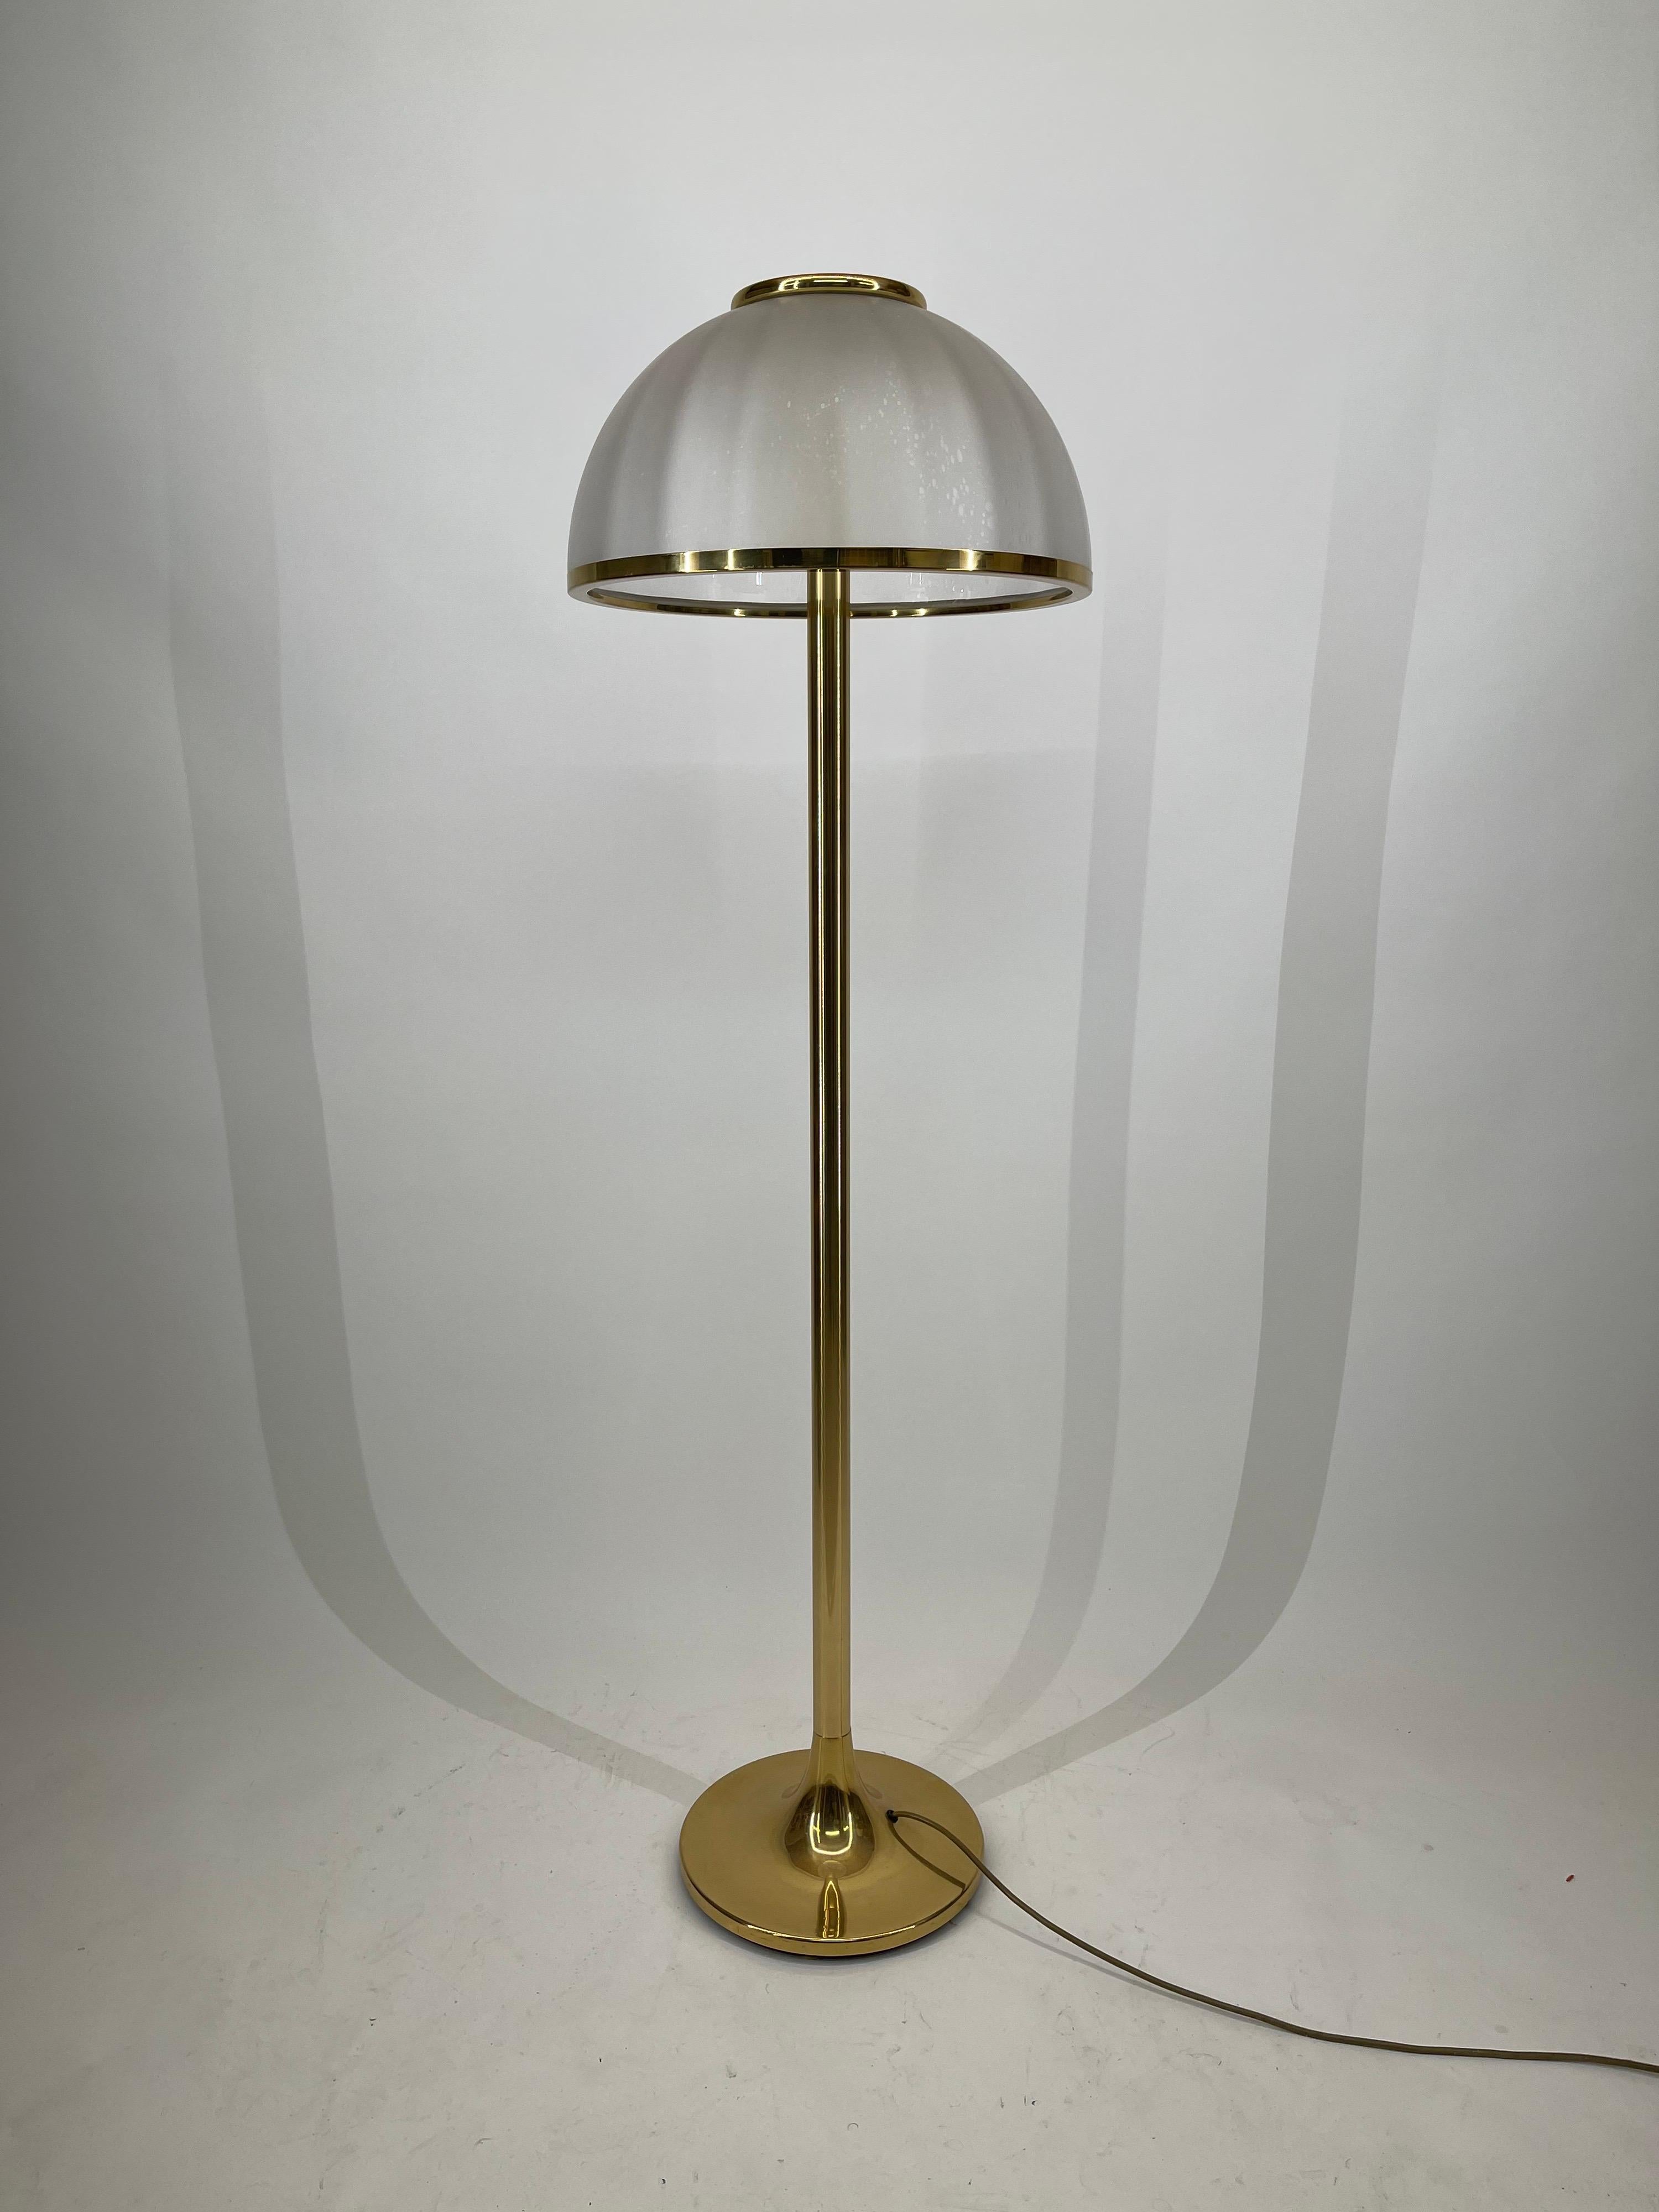 Mid-Century Modern brass and mushroom floor lamp by Fabbiani, Italy 1976.